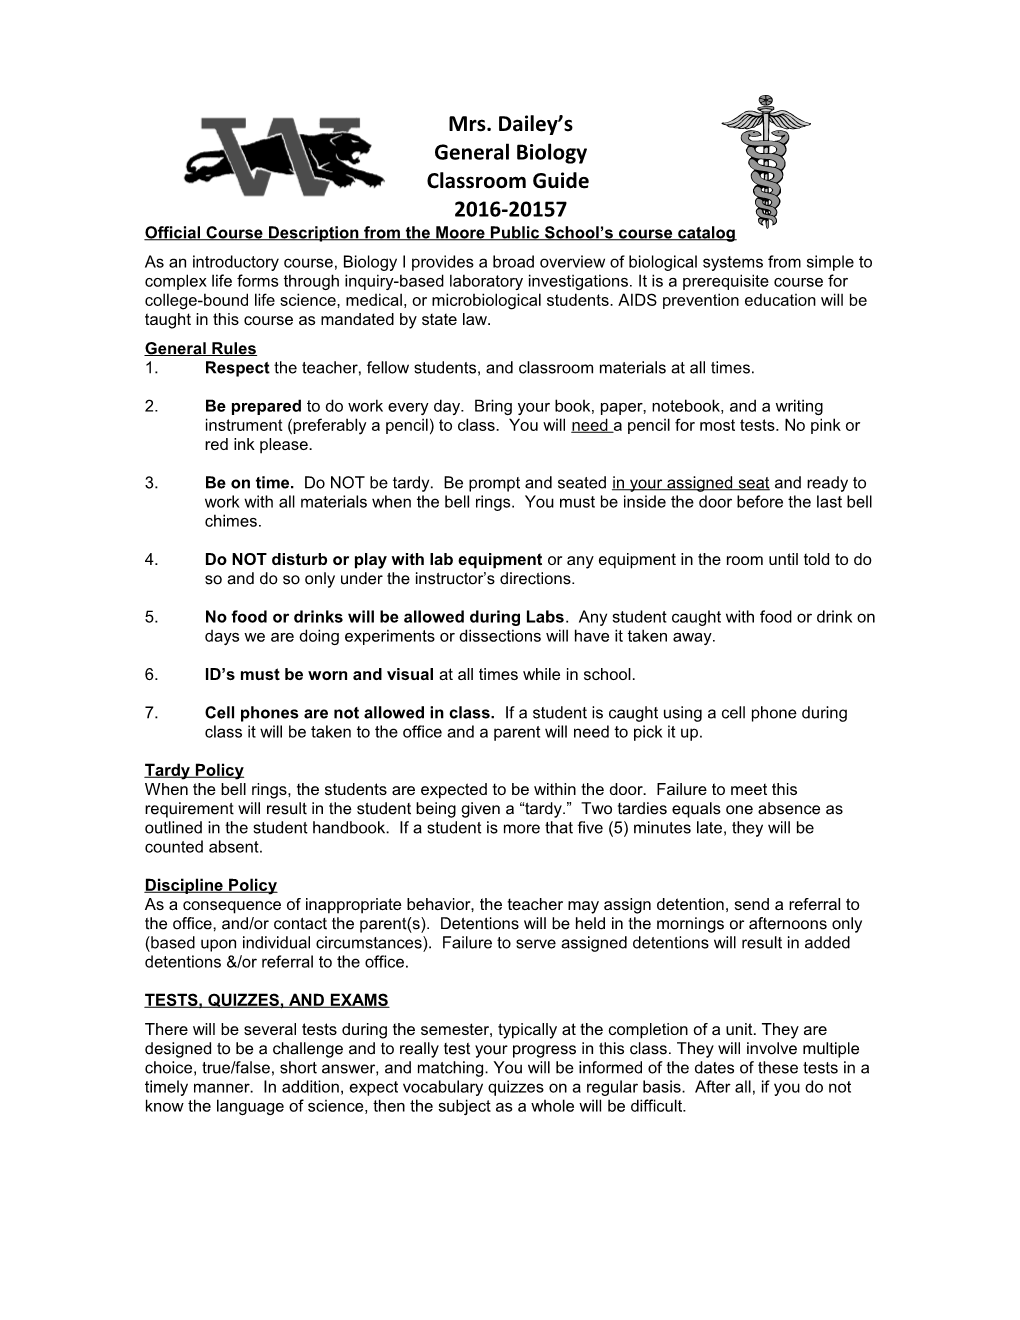 Official Course Description from the Moore Public School S Course Catalog